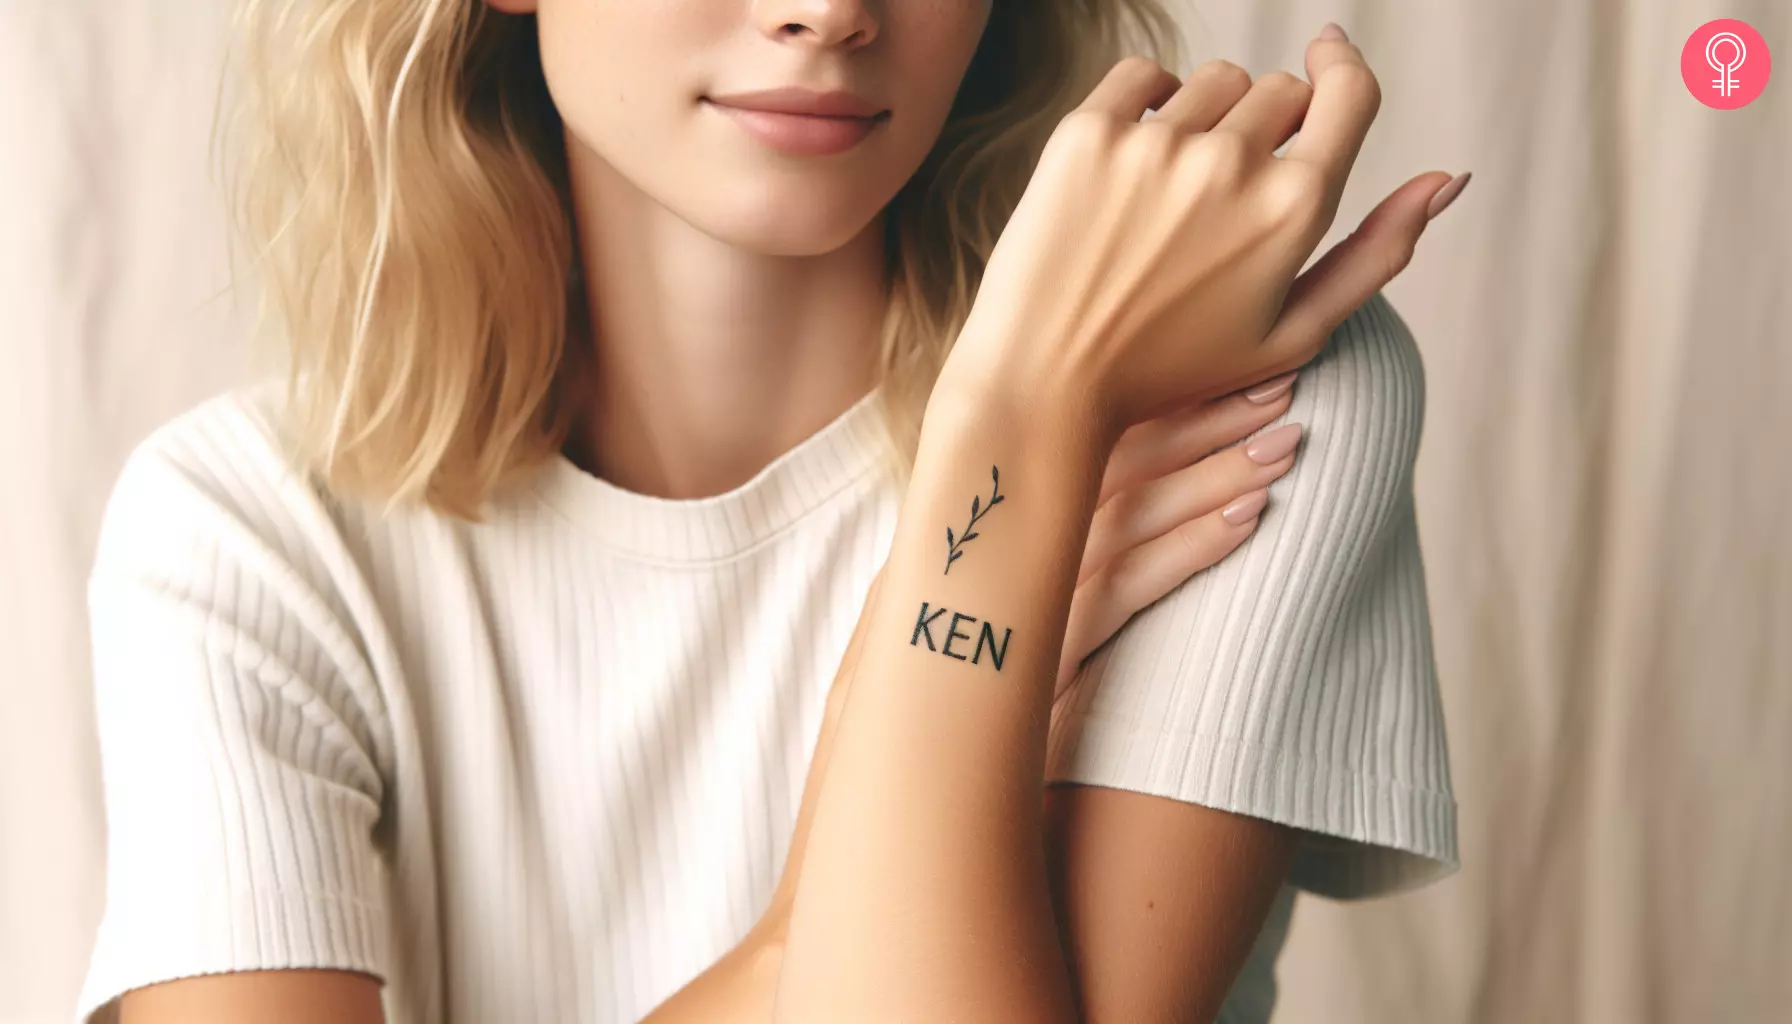 The name Ken written on the forearm